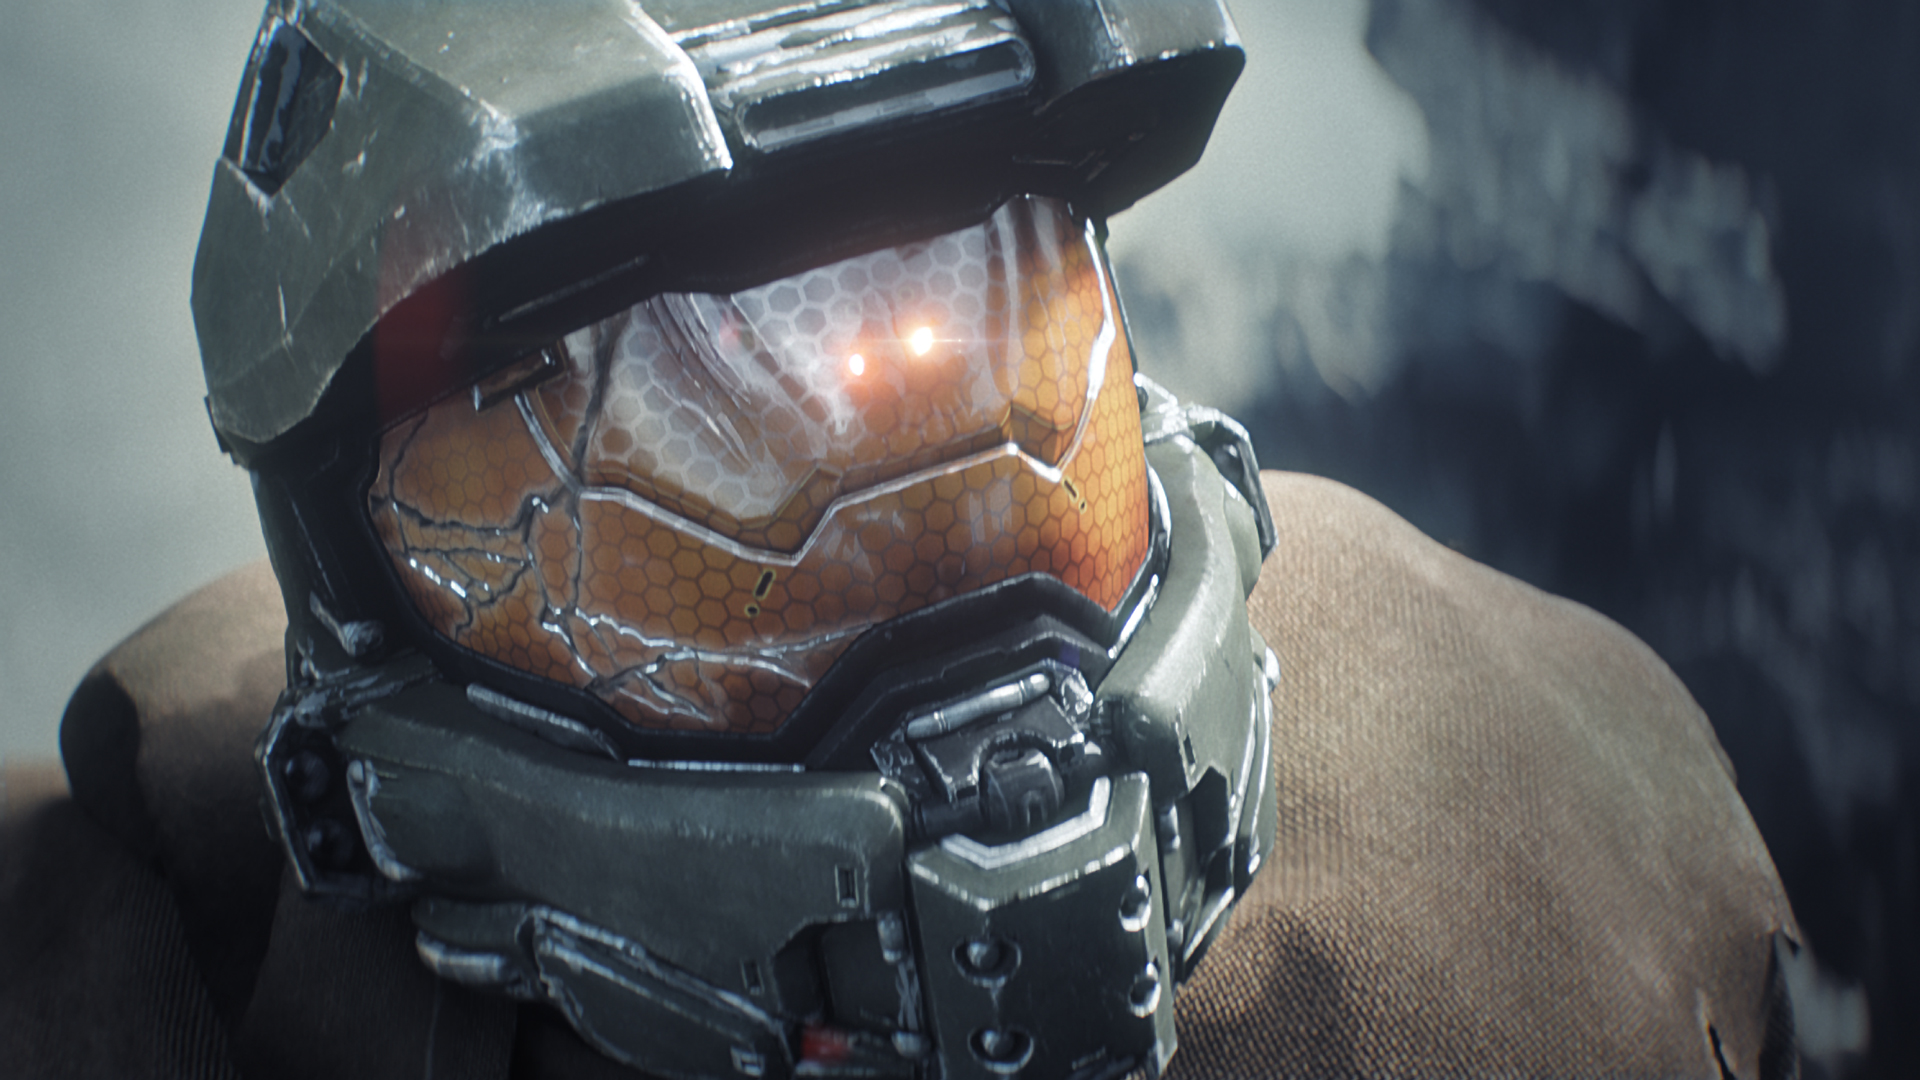 Halo 5: Guardians screenshot 220